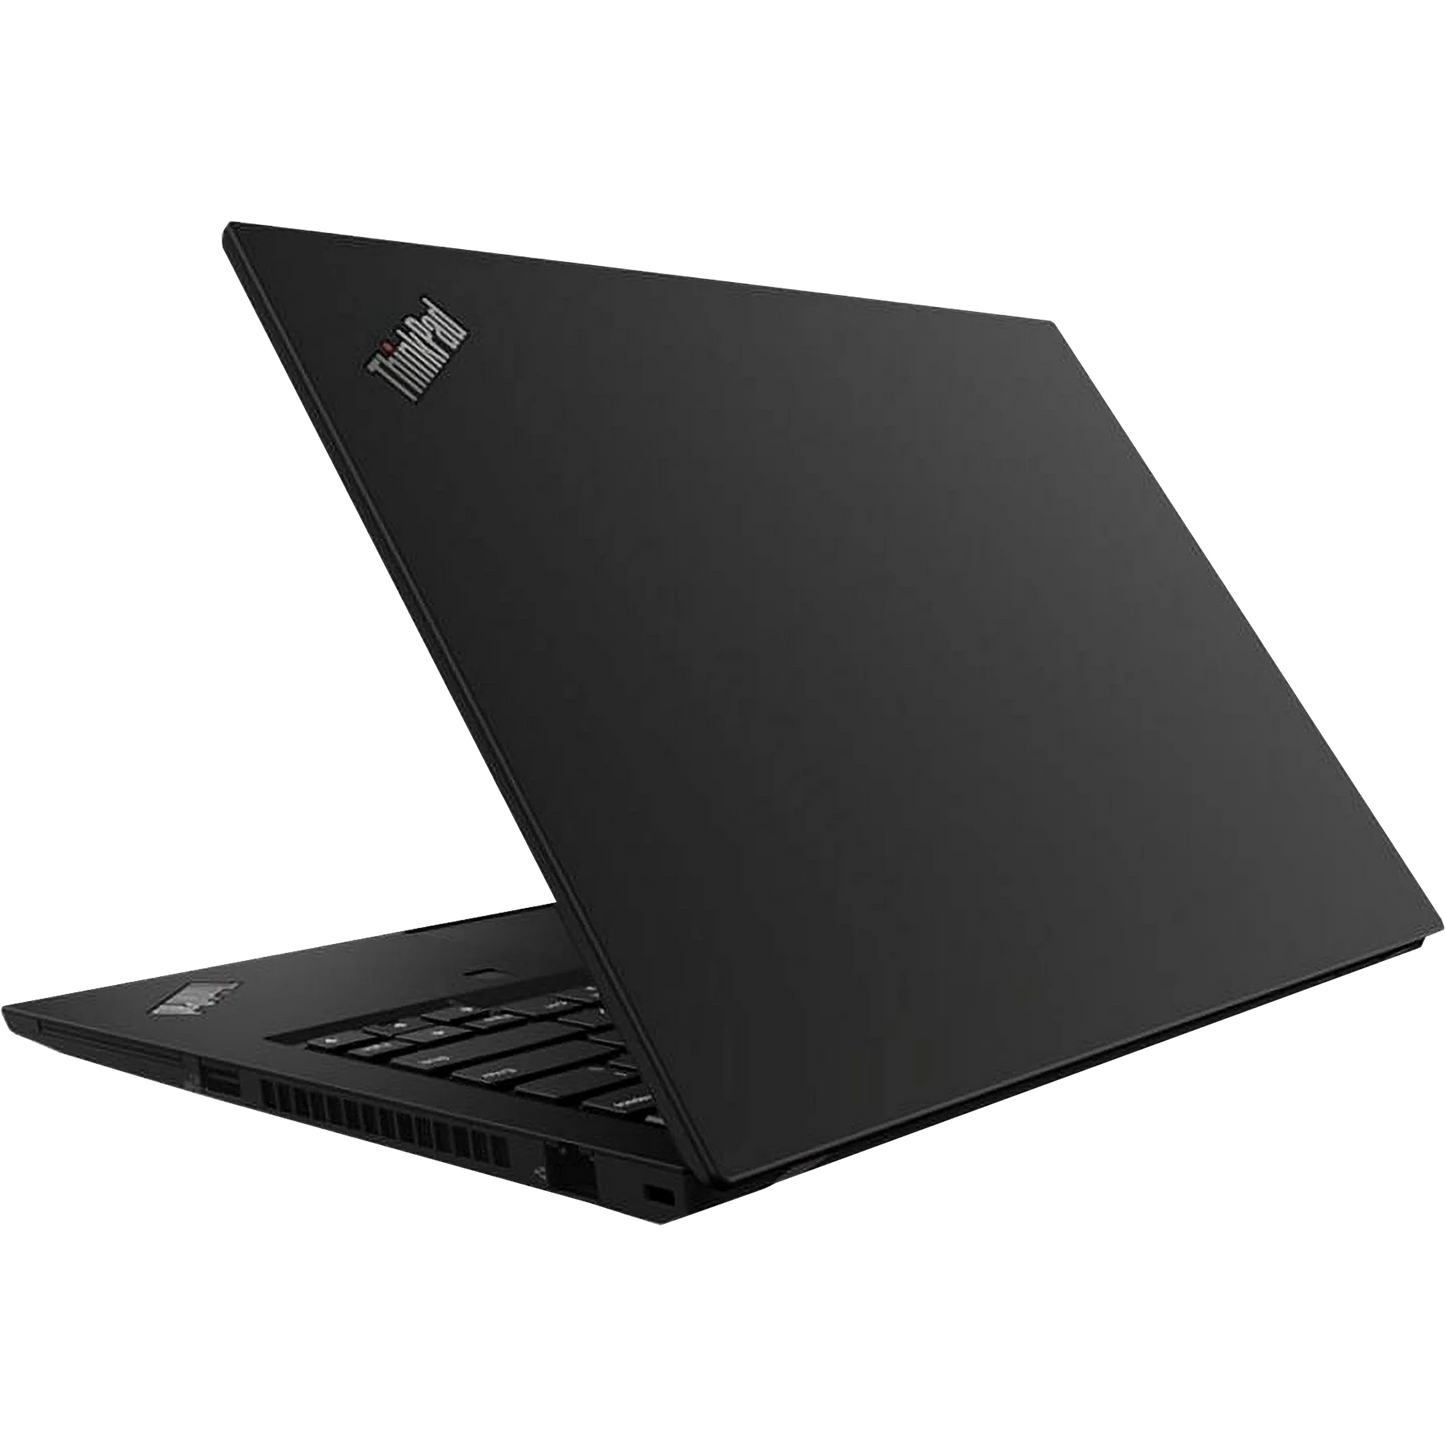 Lenovo ThinkPad T14 Intel i5, 10th Gen Laptop with 16GB Ram